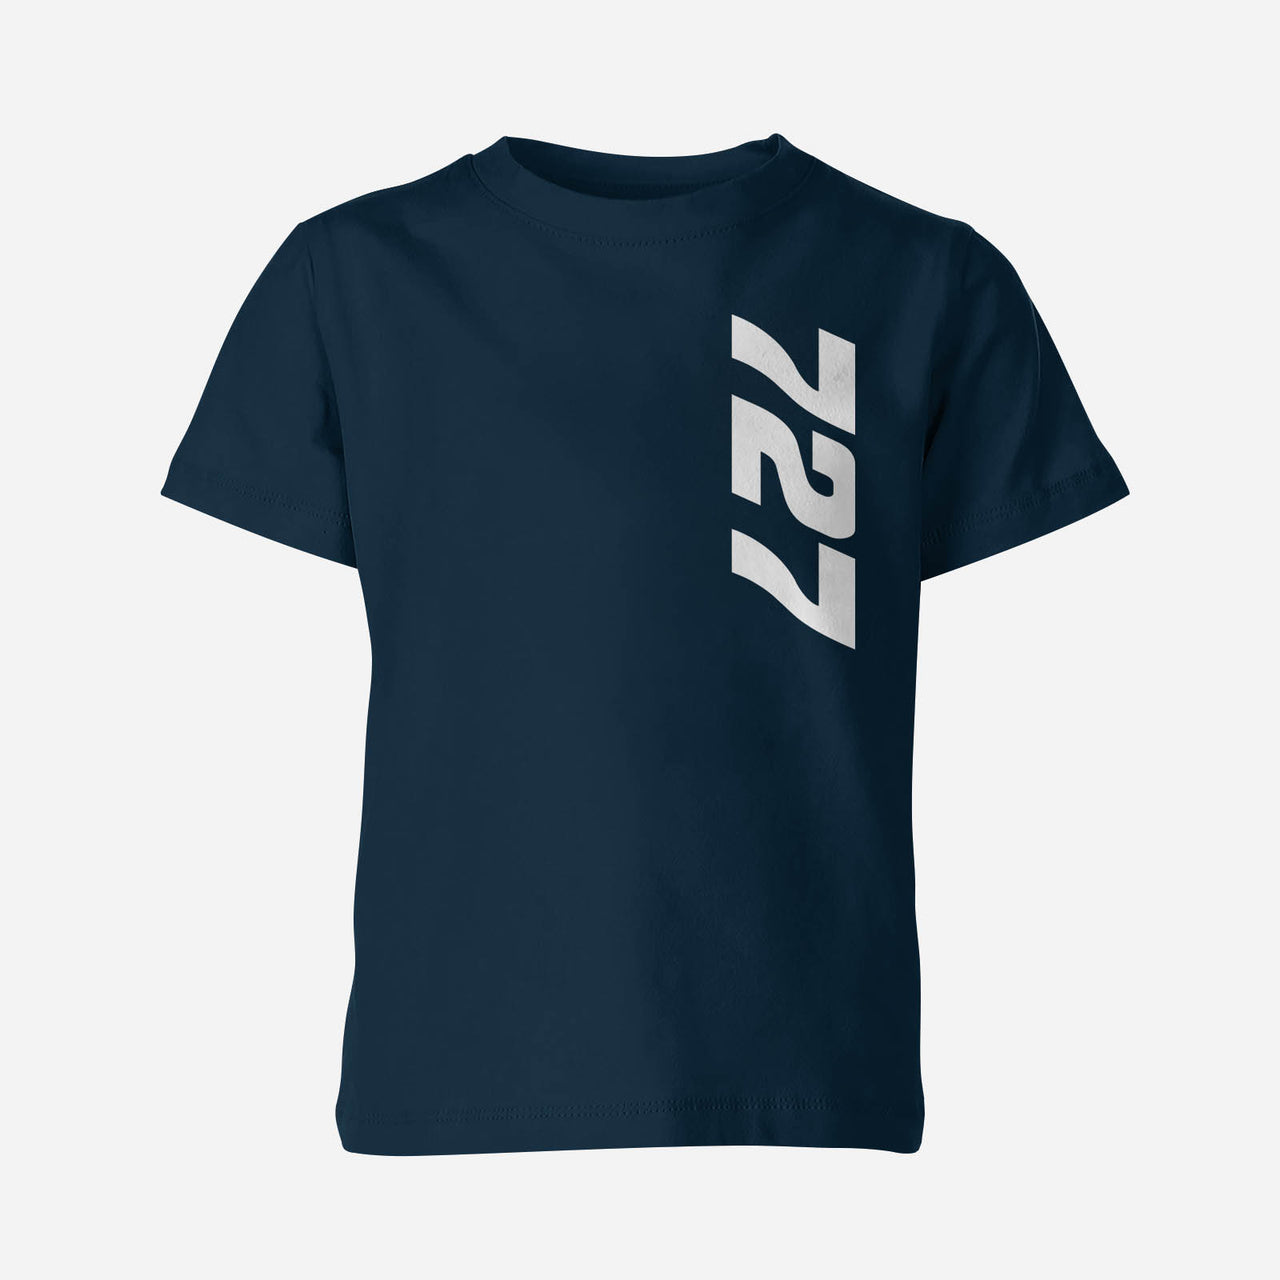 727 Side Text Designed Children T-Shirts